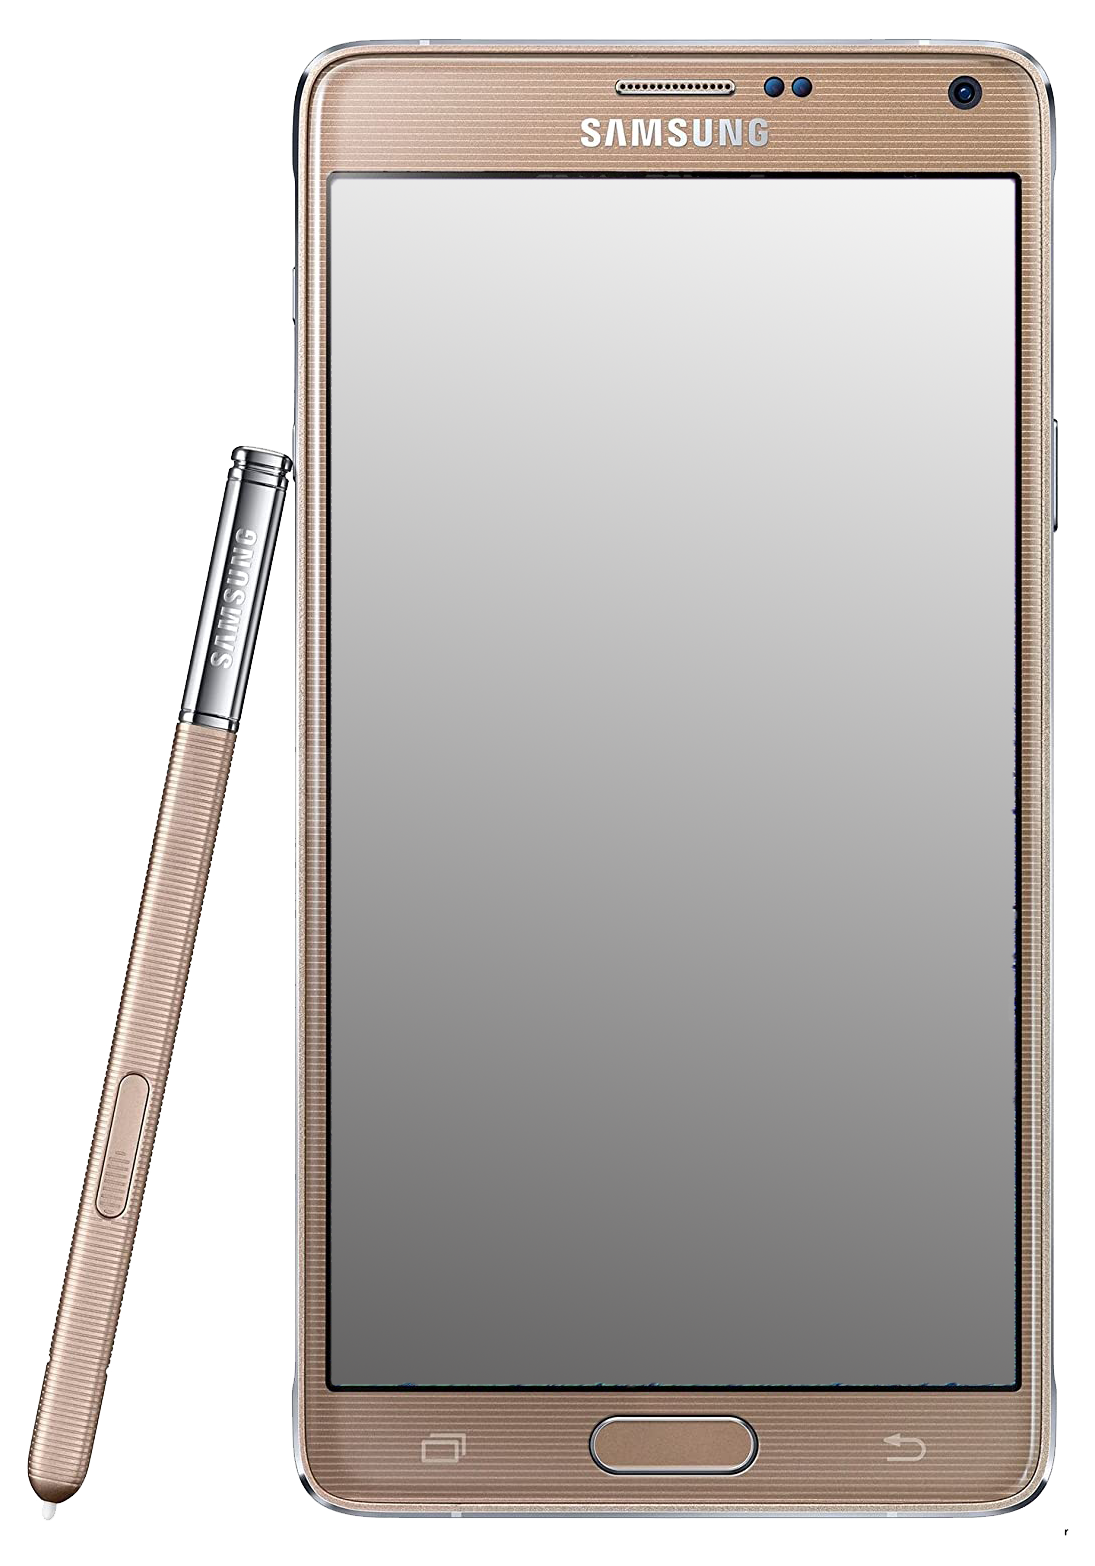 Samsung Galaxy Note 4 N910F gold - Ohne Vertrag